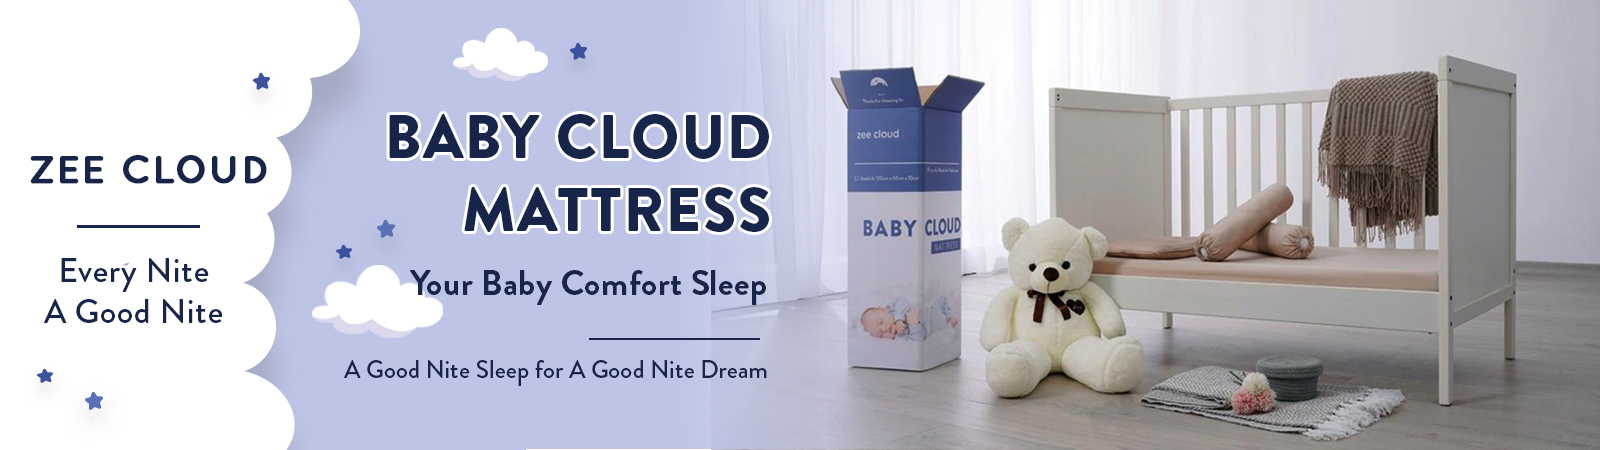 Baby Cloud Mattress: The Gift of Restful Sleep